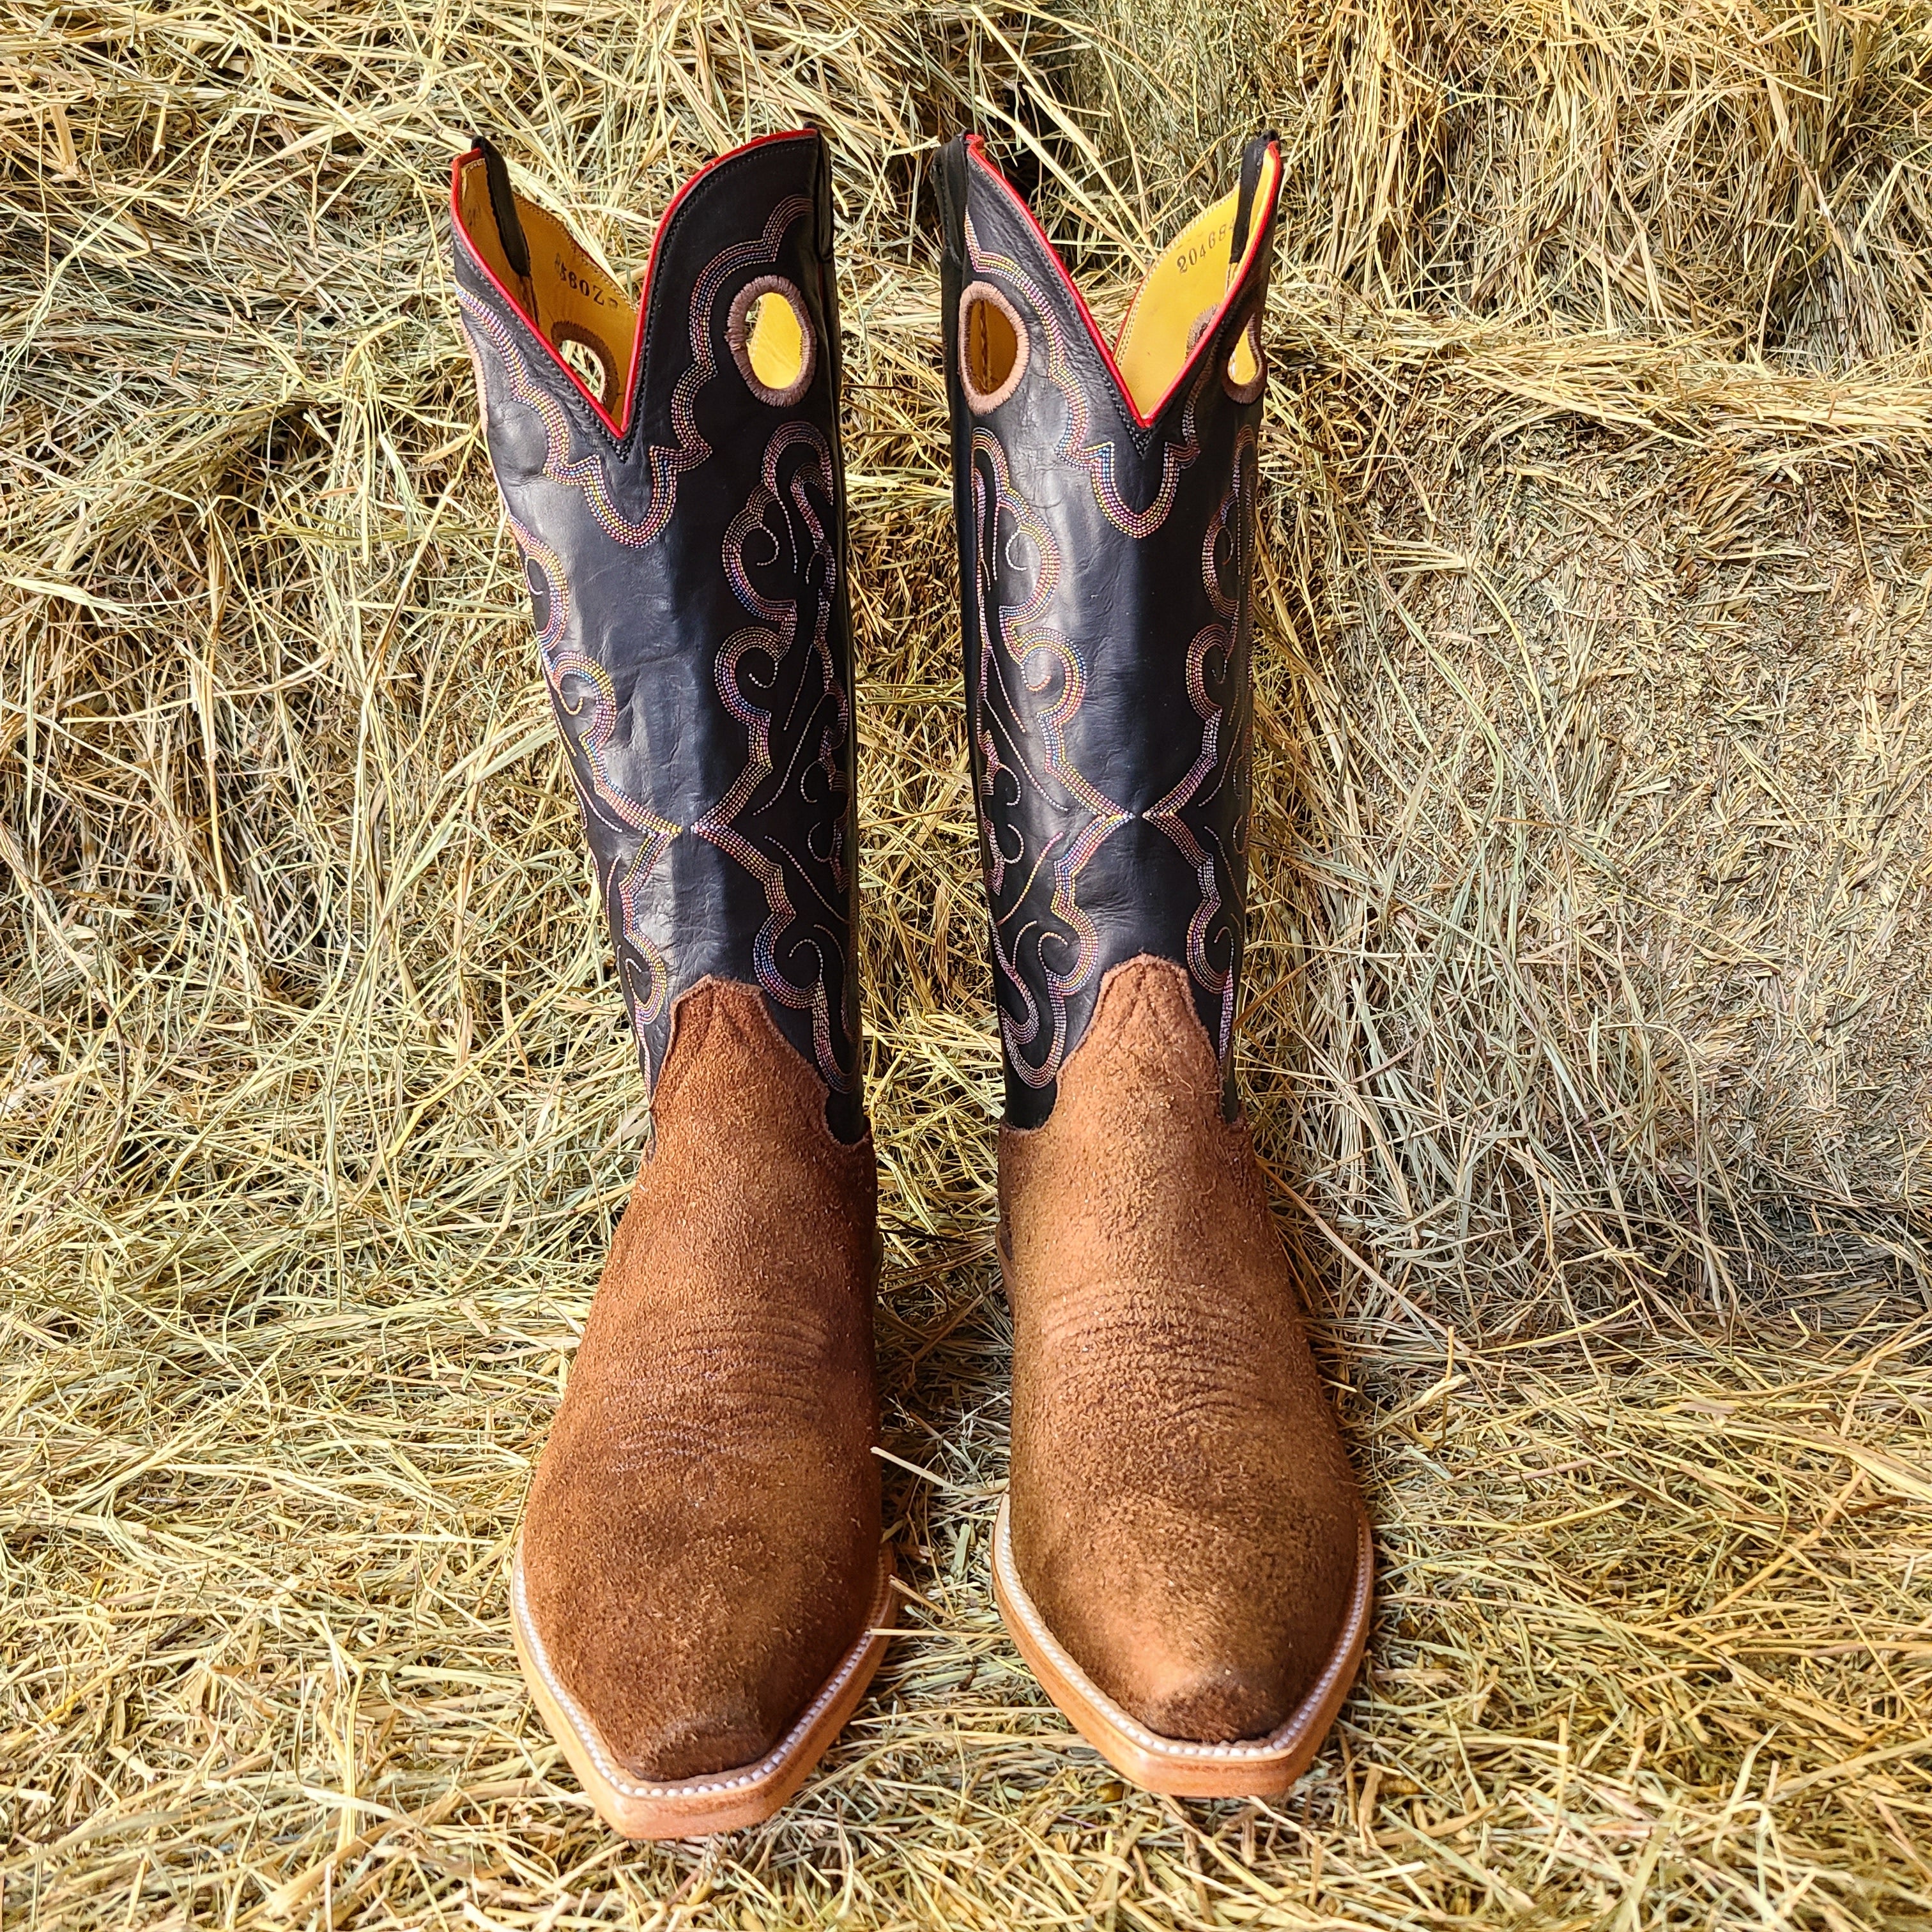 Picosa Creek Boots - Tobacco Buffalo Roughout w/ Black Remuda - The Pecos